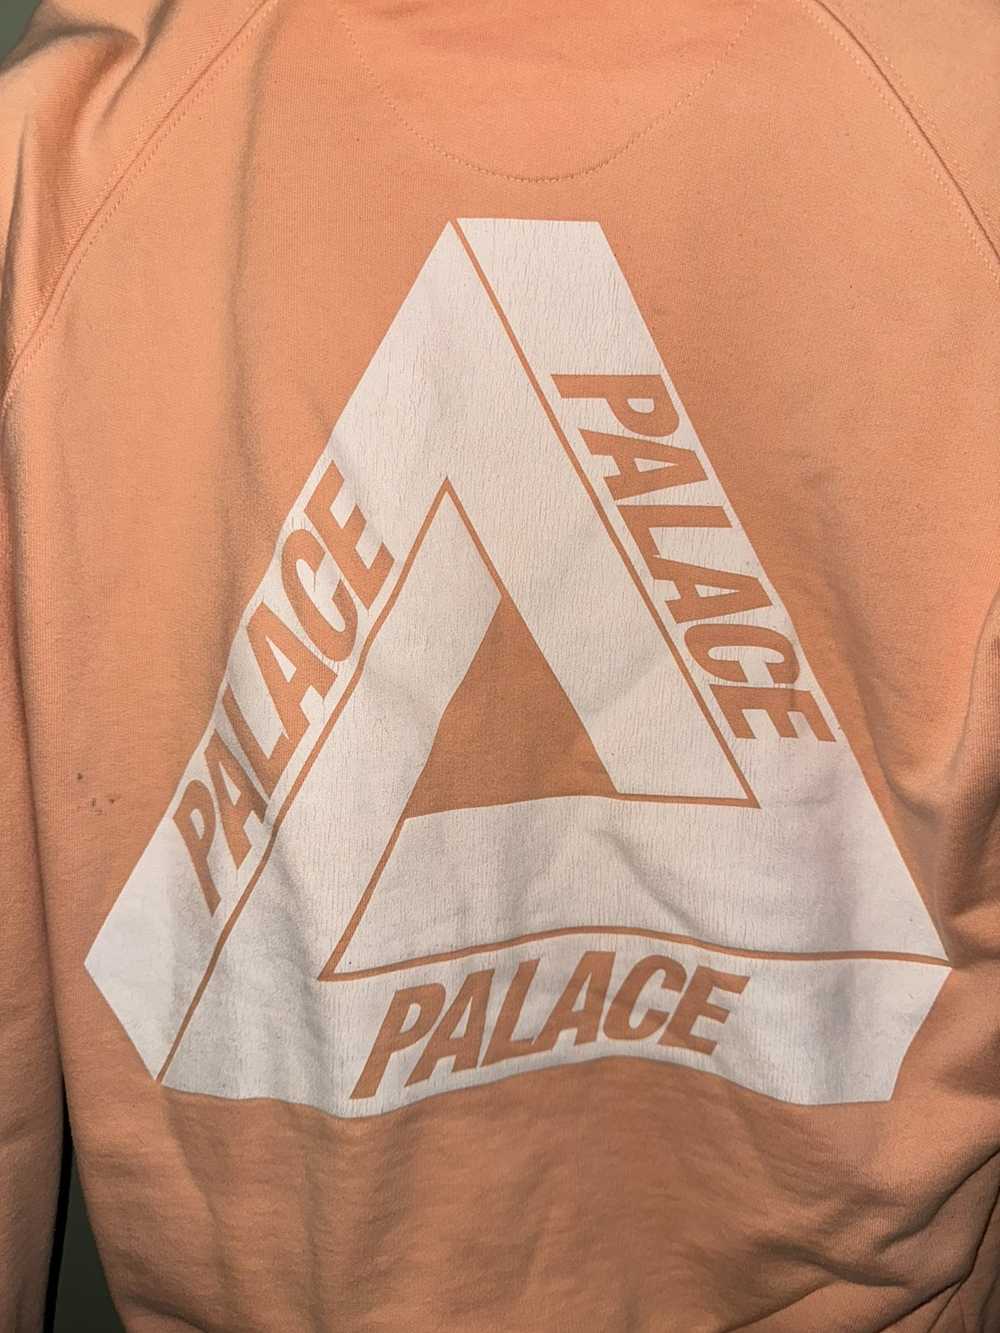 Palace Palace Tri Ferg Peach Hoodie - image 3